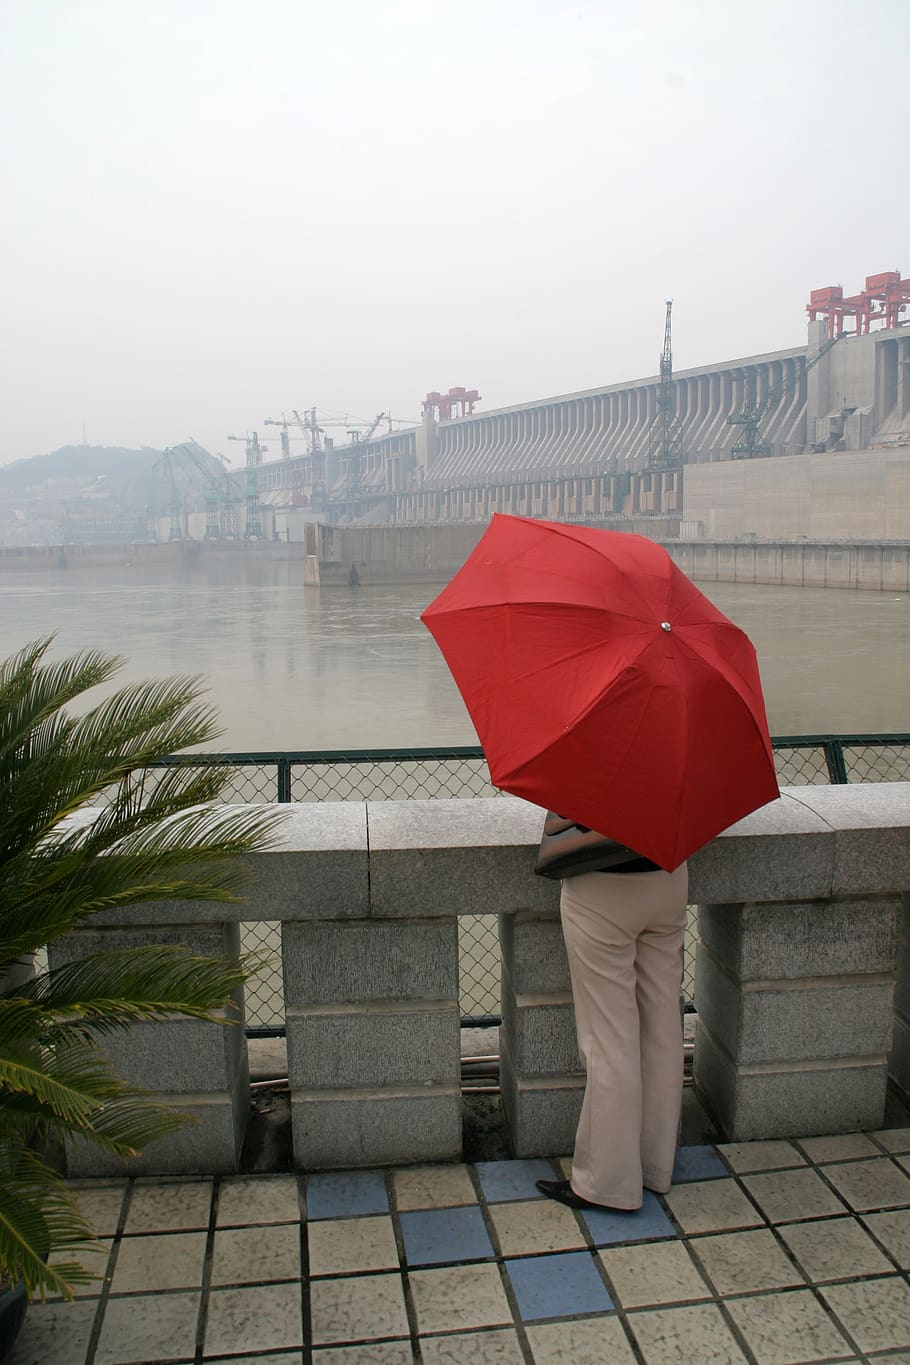 three gorges, dam, screen, red, china, parasol, shade tree, water, umbrella, protection